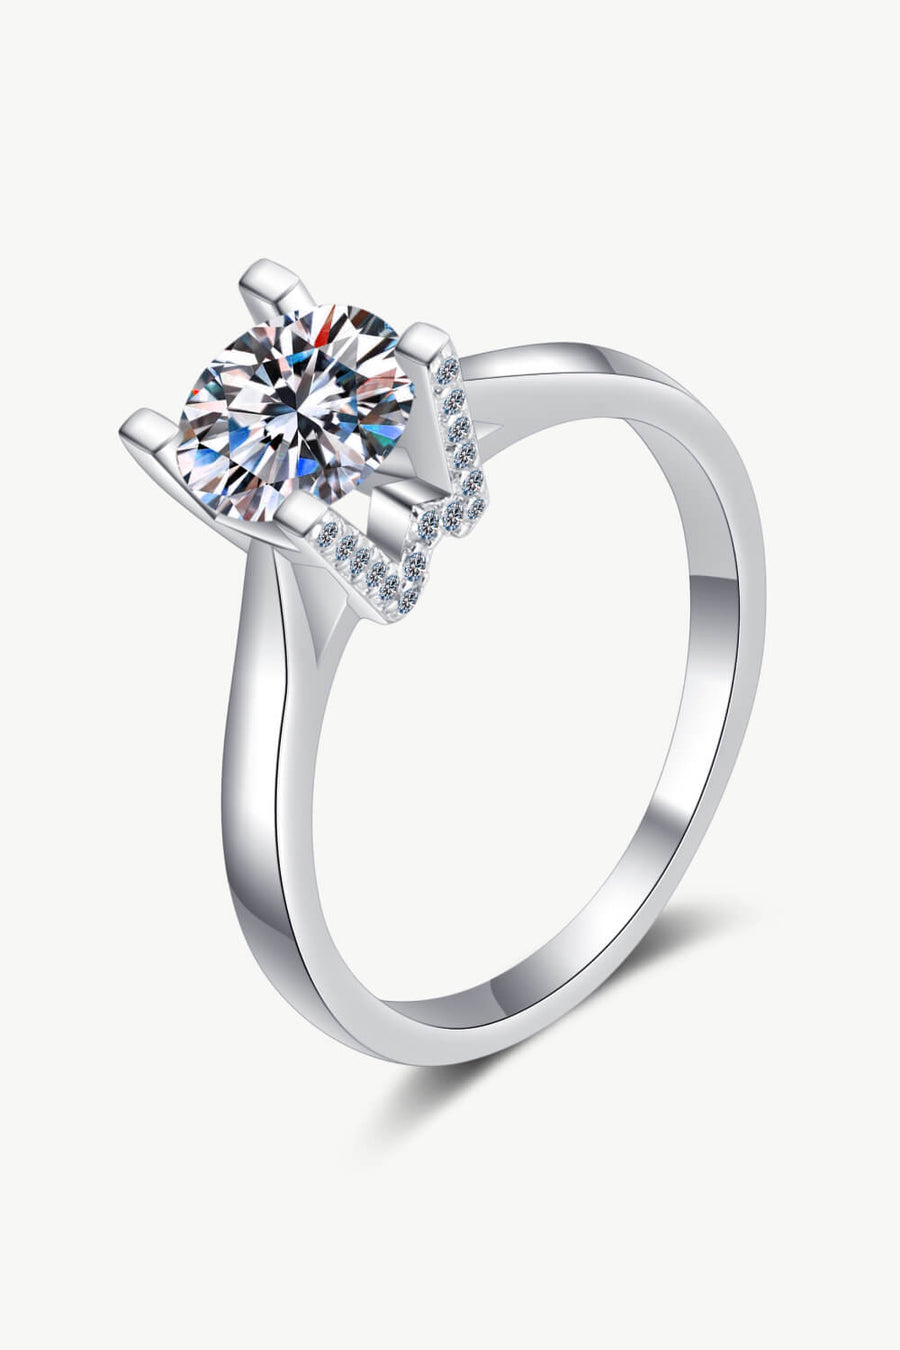 Best Diamond Ring Jewelry Gifts for Women | 1 Carat Diamond Ring - Express Yourself | MASON New York